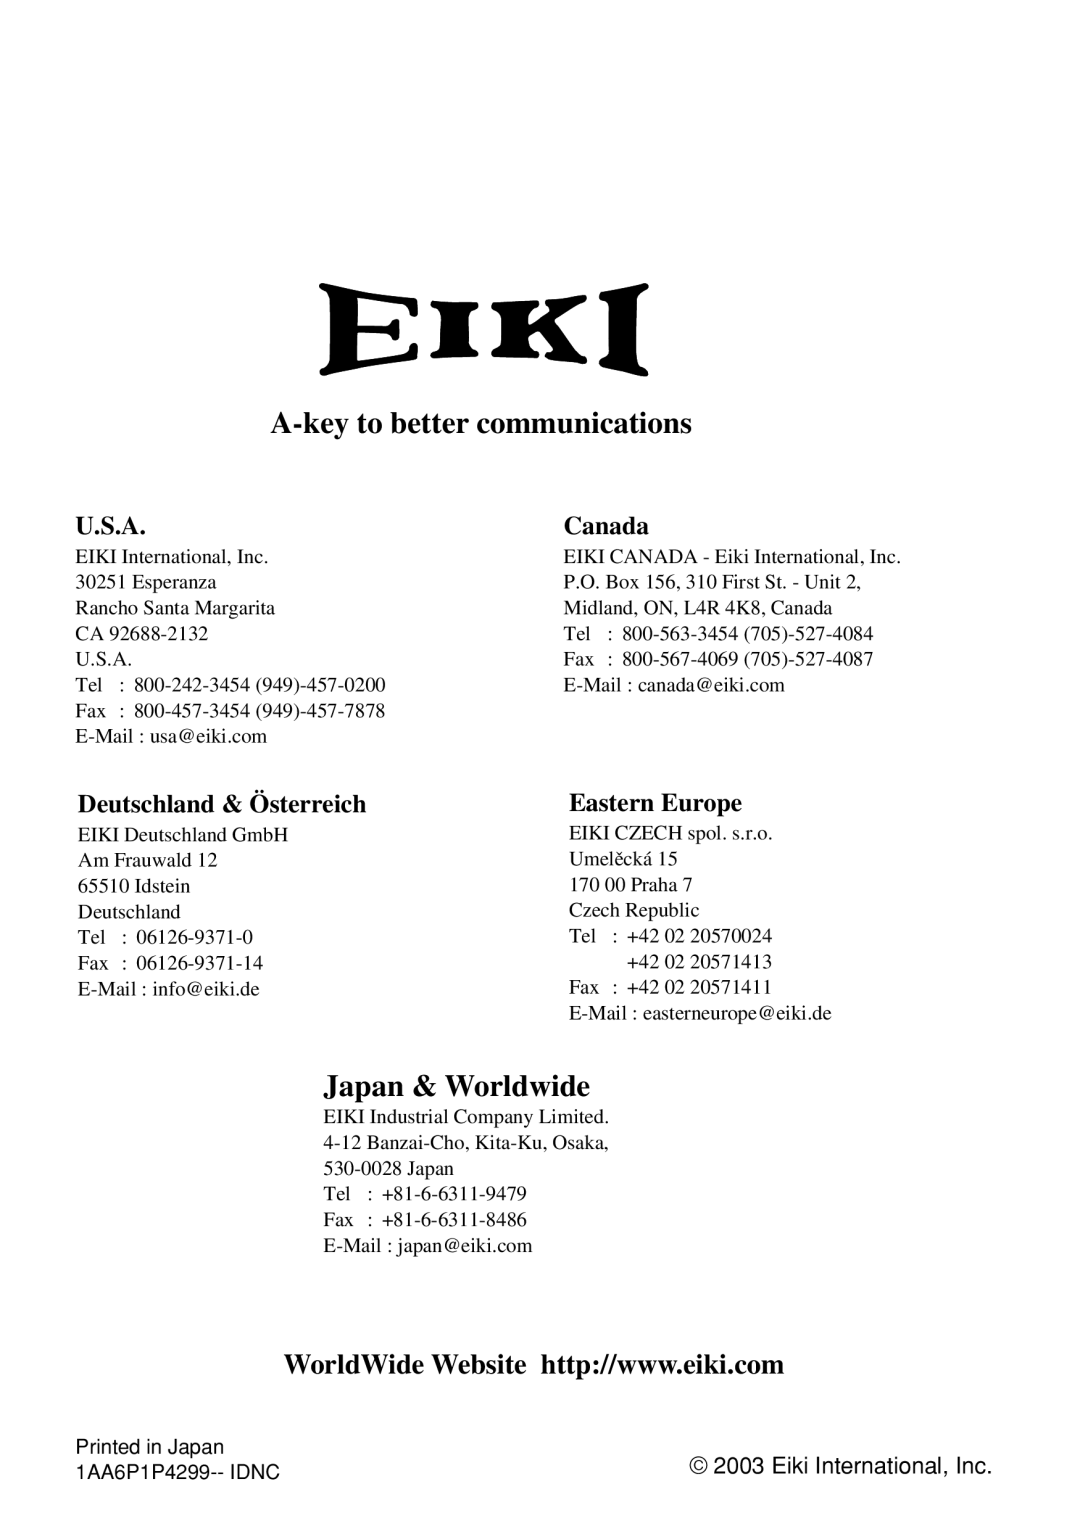 Eiki PjNET-20 U.S.A, Canada, Deutschland & Österreich, Eastern Europe, A-key to better communications, Japan & Worldwide 